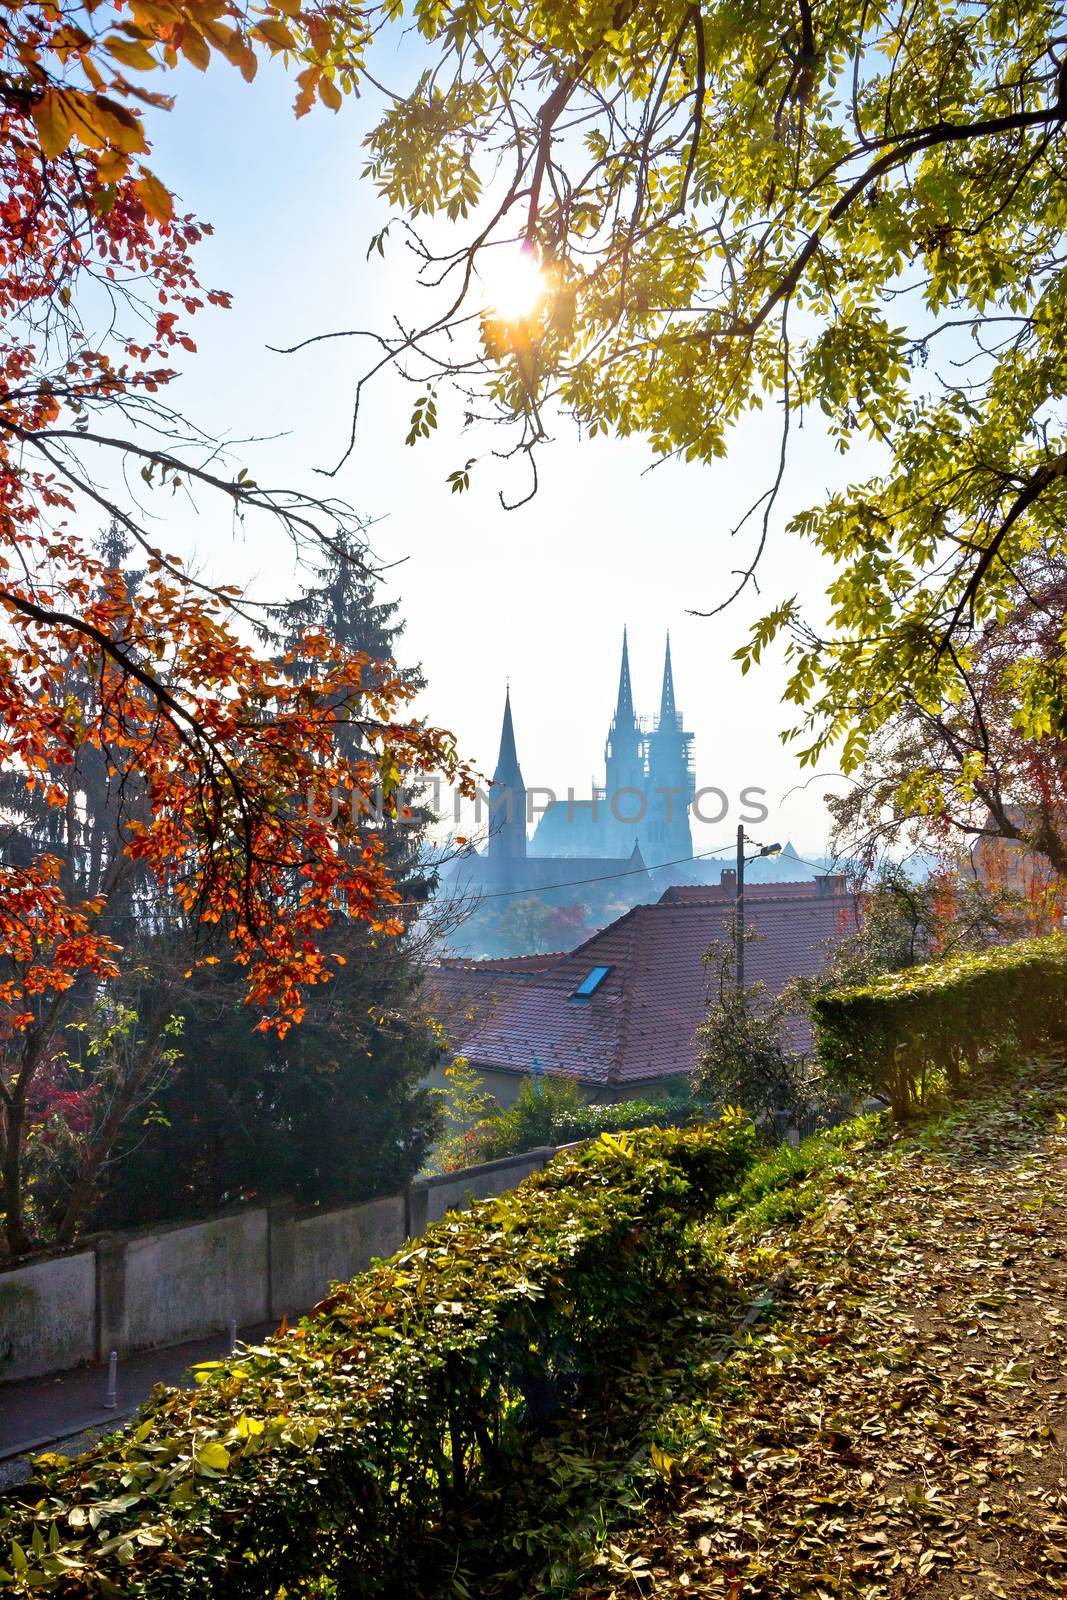 Zagreb skyline in autumn colors by xbrchx